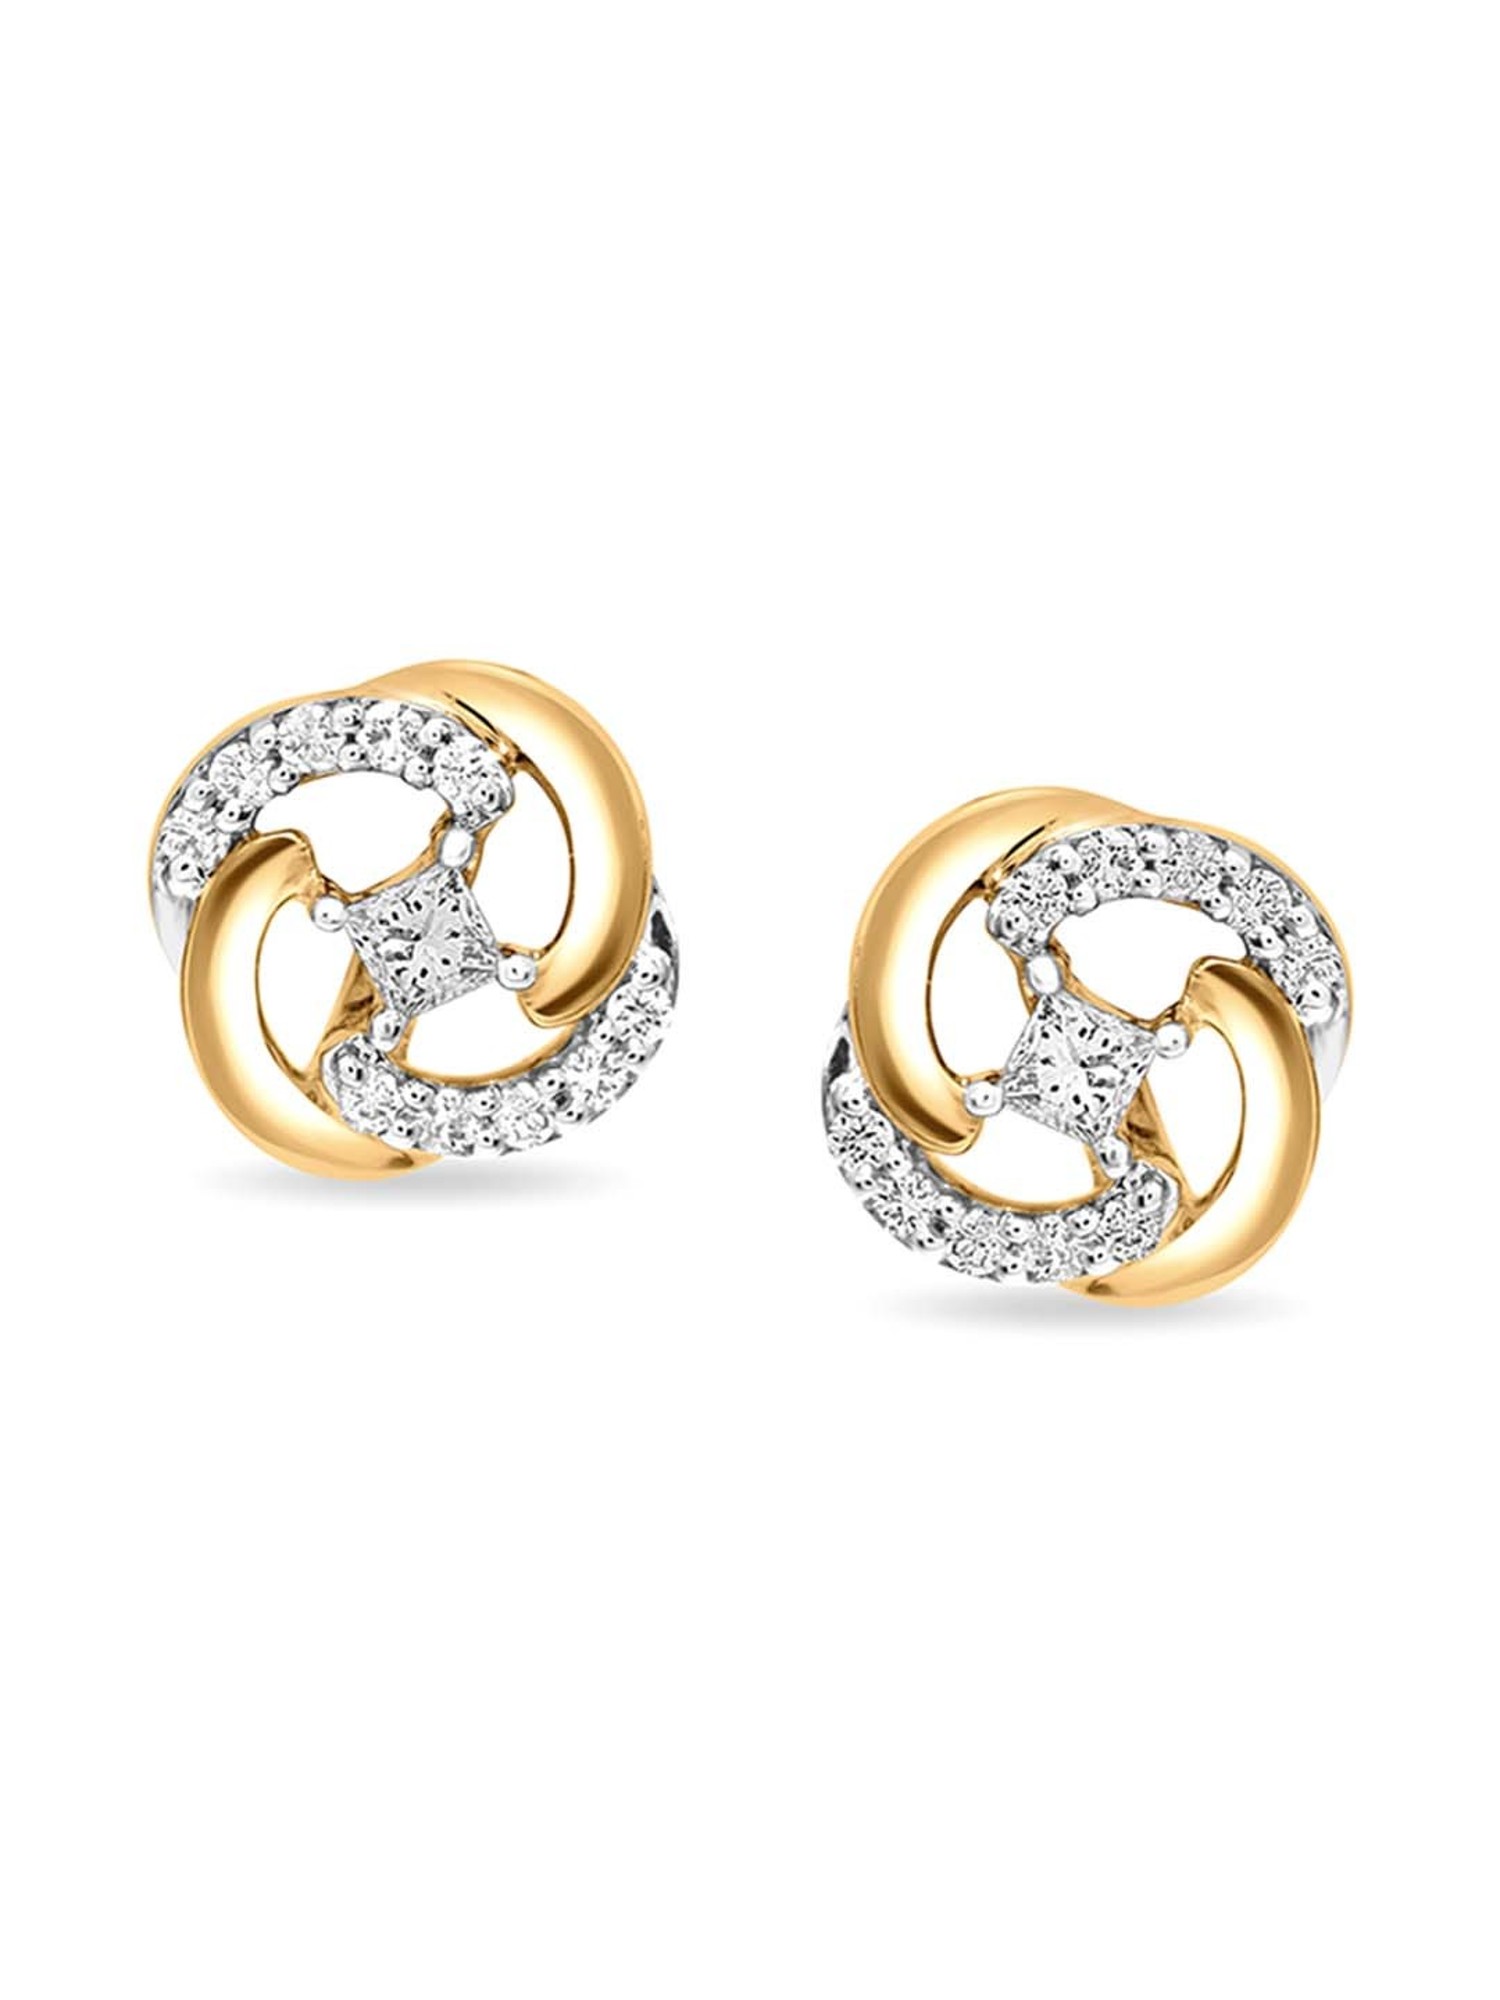 Mia by Tanishq Twinkle Bells Gold & Diamond Drop Earrings : Amazon.in:  Fashion